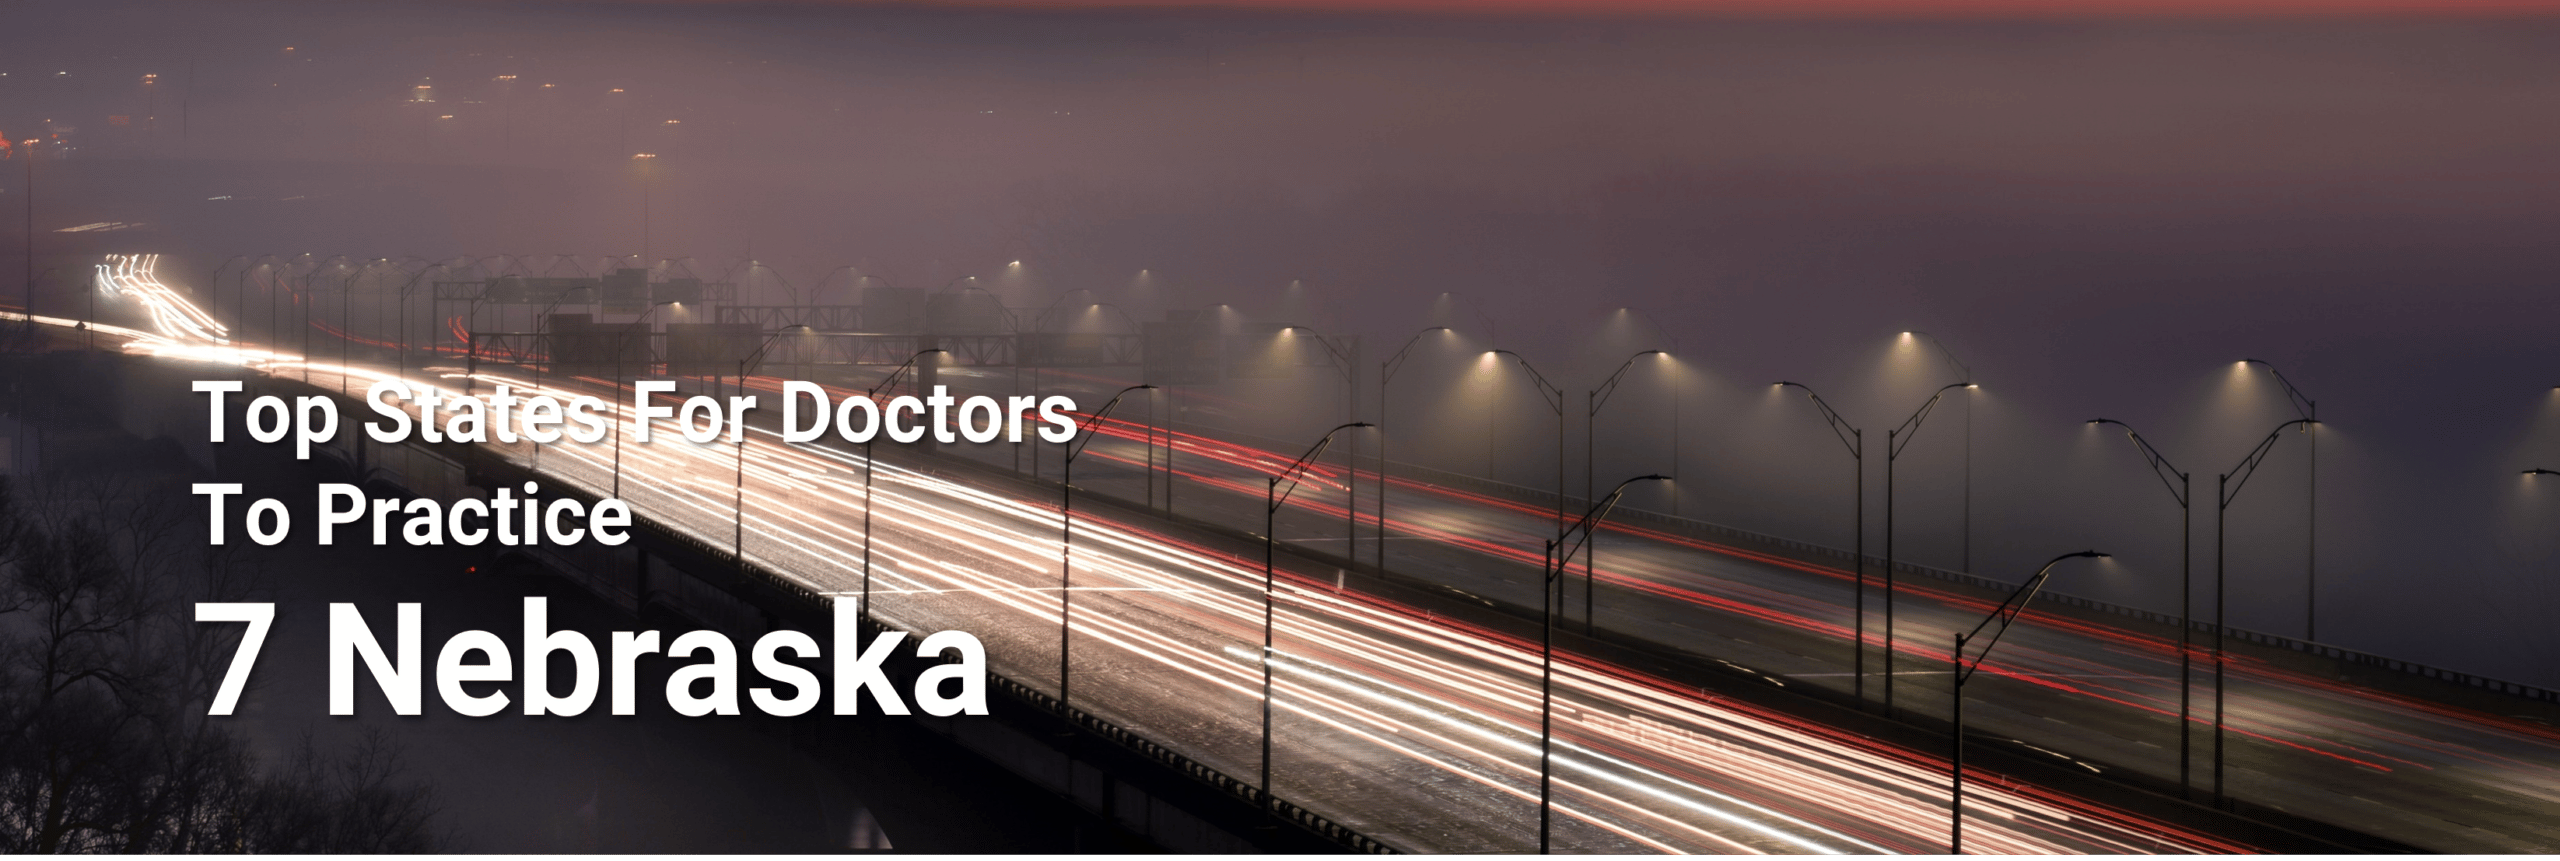 Top States for Doctors to Practice 7 Nebraska